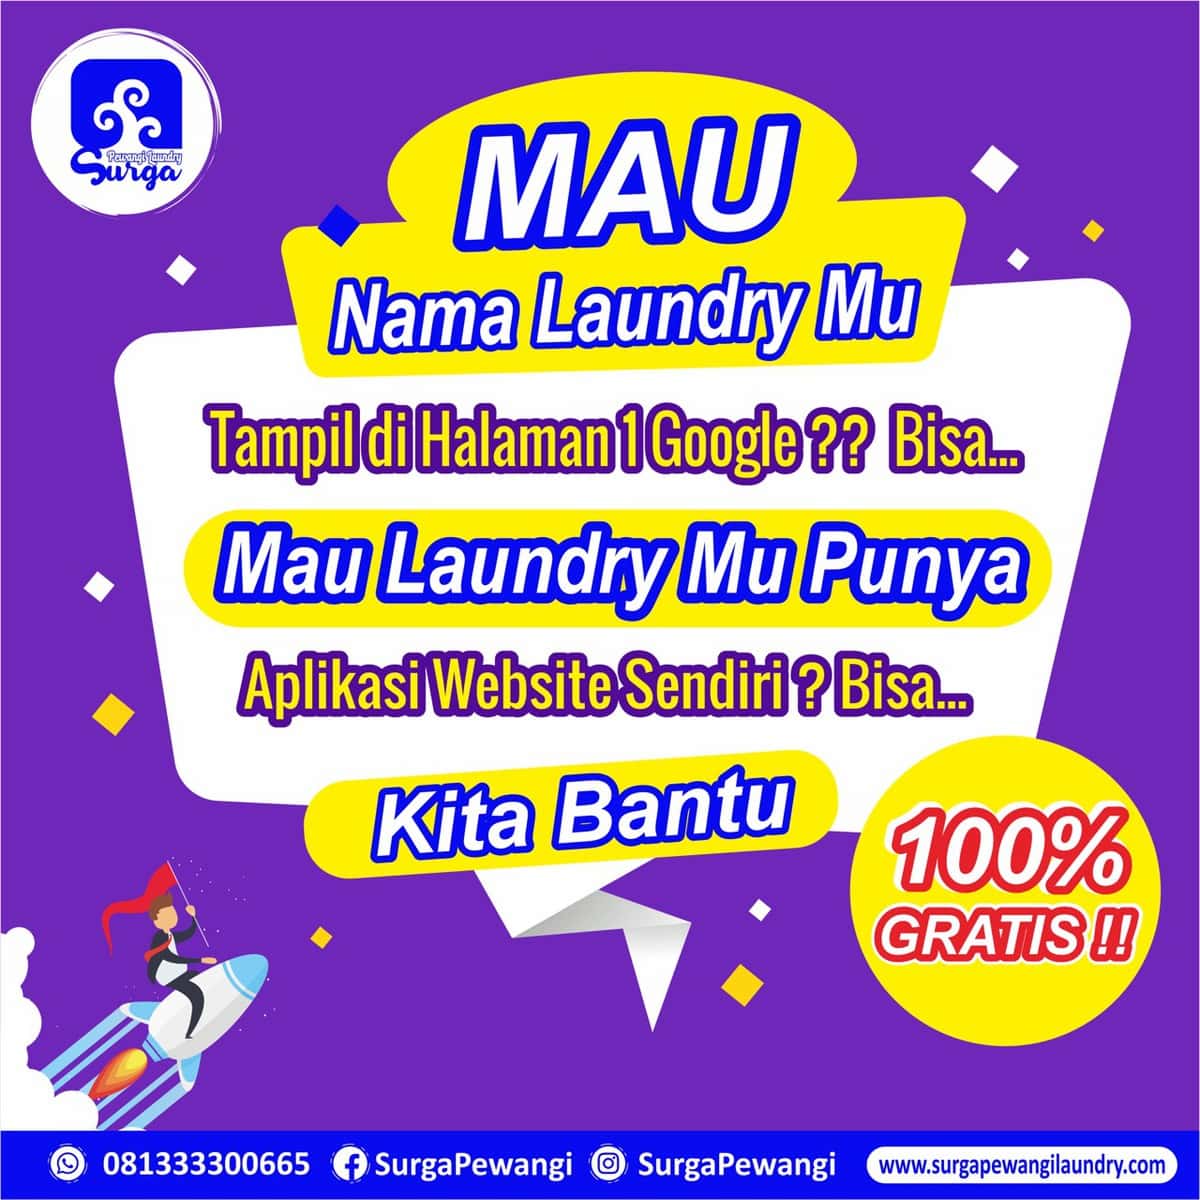 IMG 6360 - Produsen Pewangi Laundry Yogyakarta Sleman TERBAIK TERMURAH